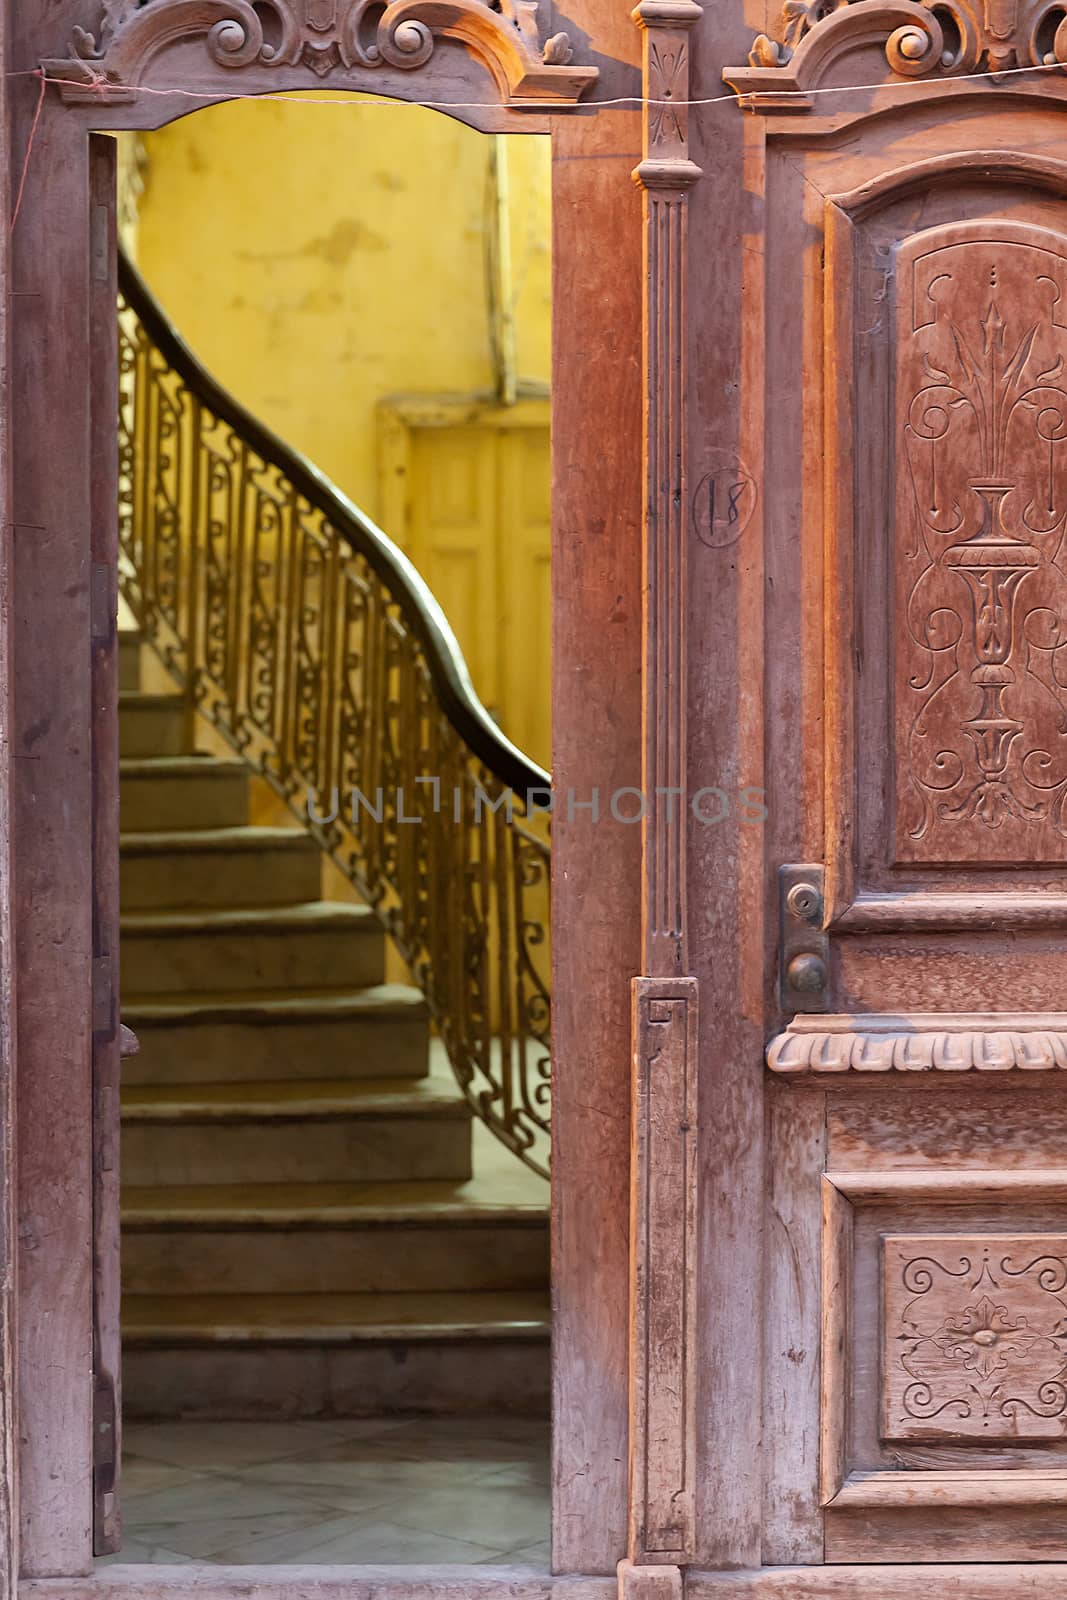 Beautiful ornate open old wooden door and staircase in Havana, Cuba. Symbol of opportunities